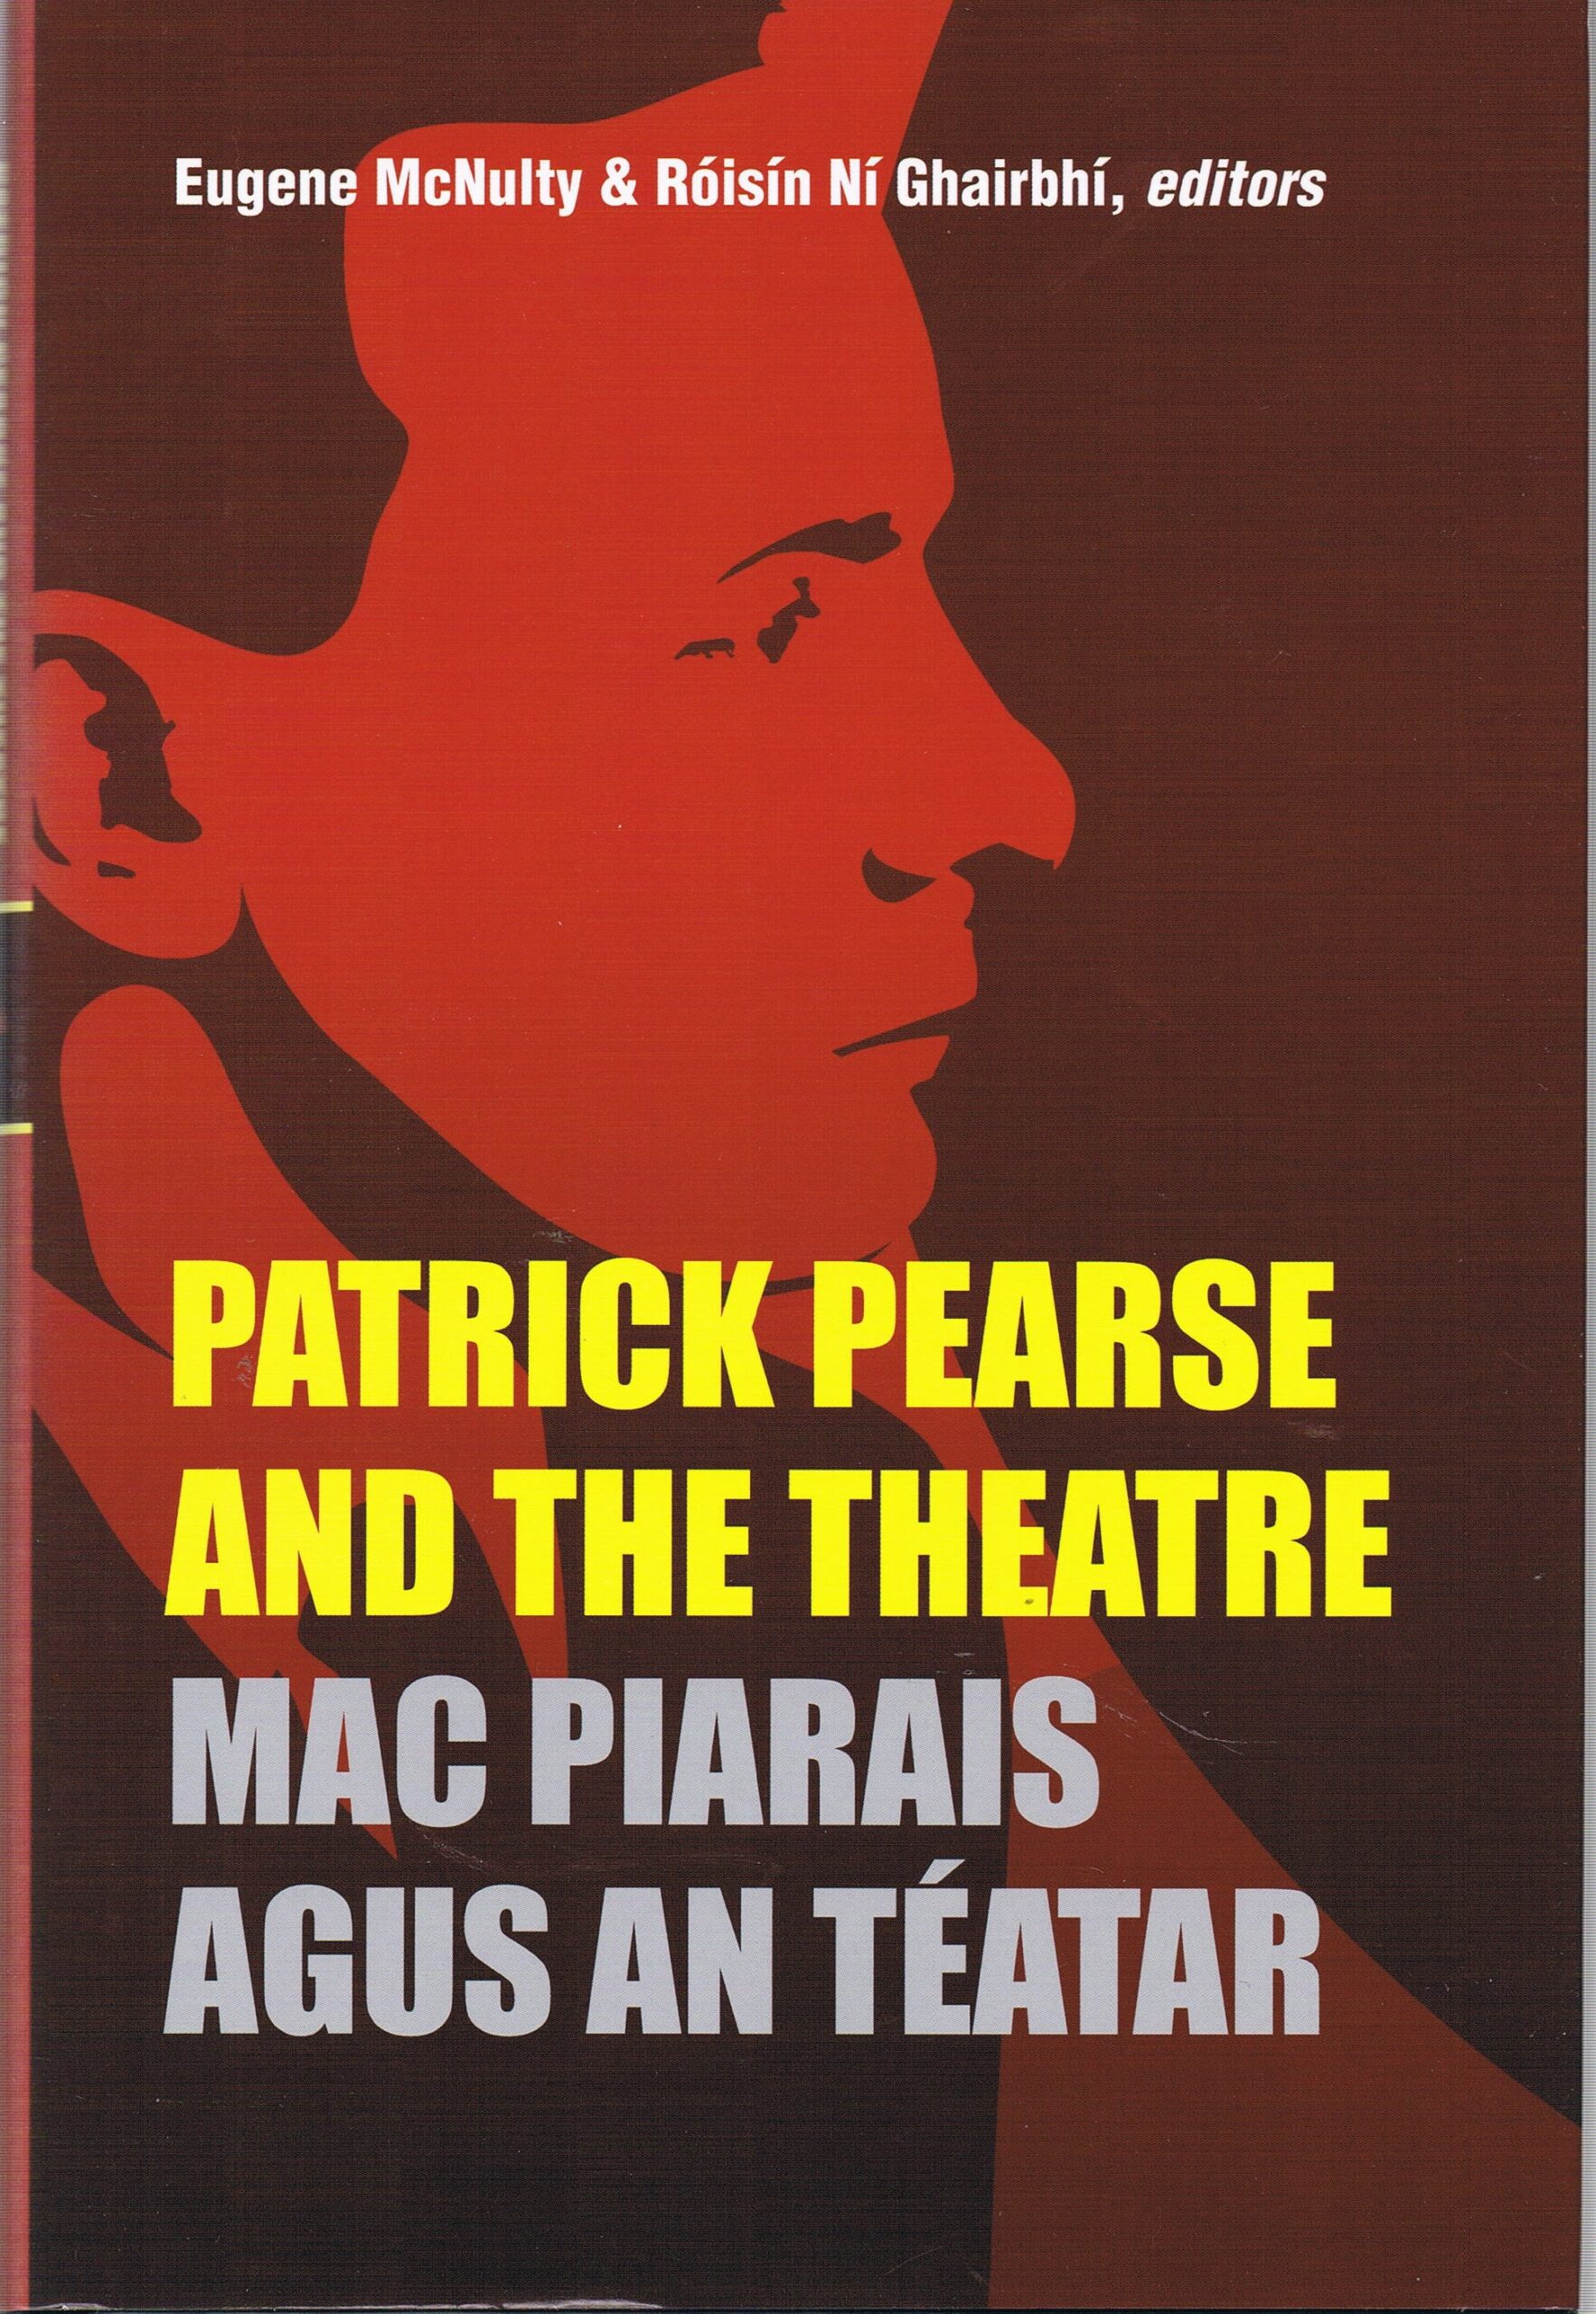 Patrick Pearse and the Theatre ( Mac Piarais Agus An Téatar) by Eugene McNulty & Roisin Ni Ghairbhi